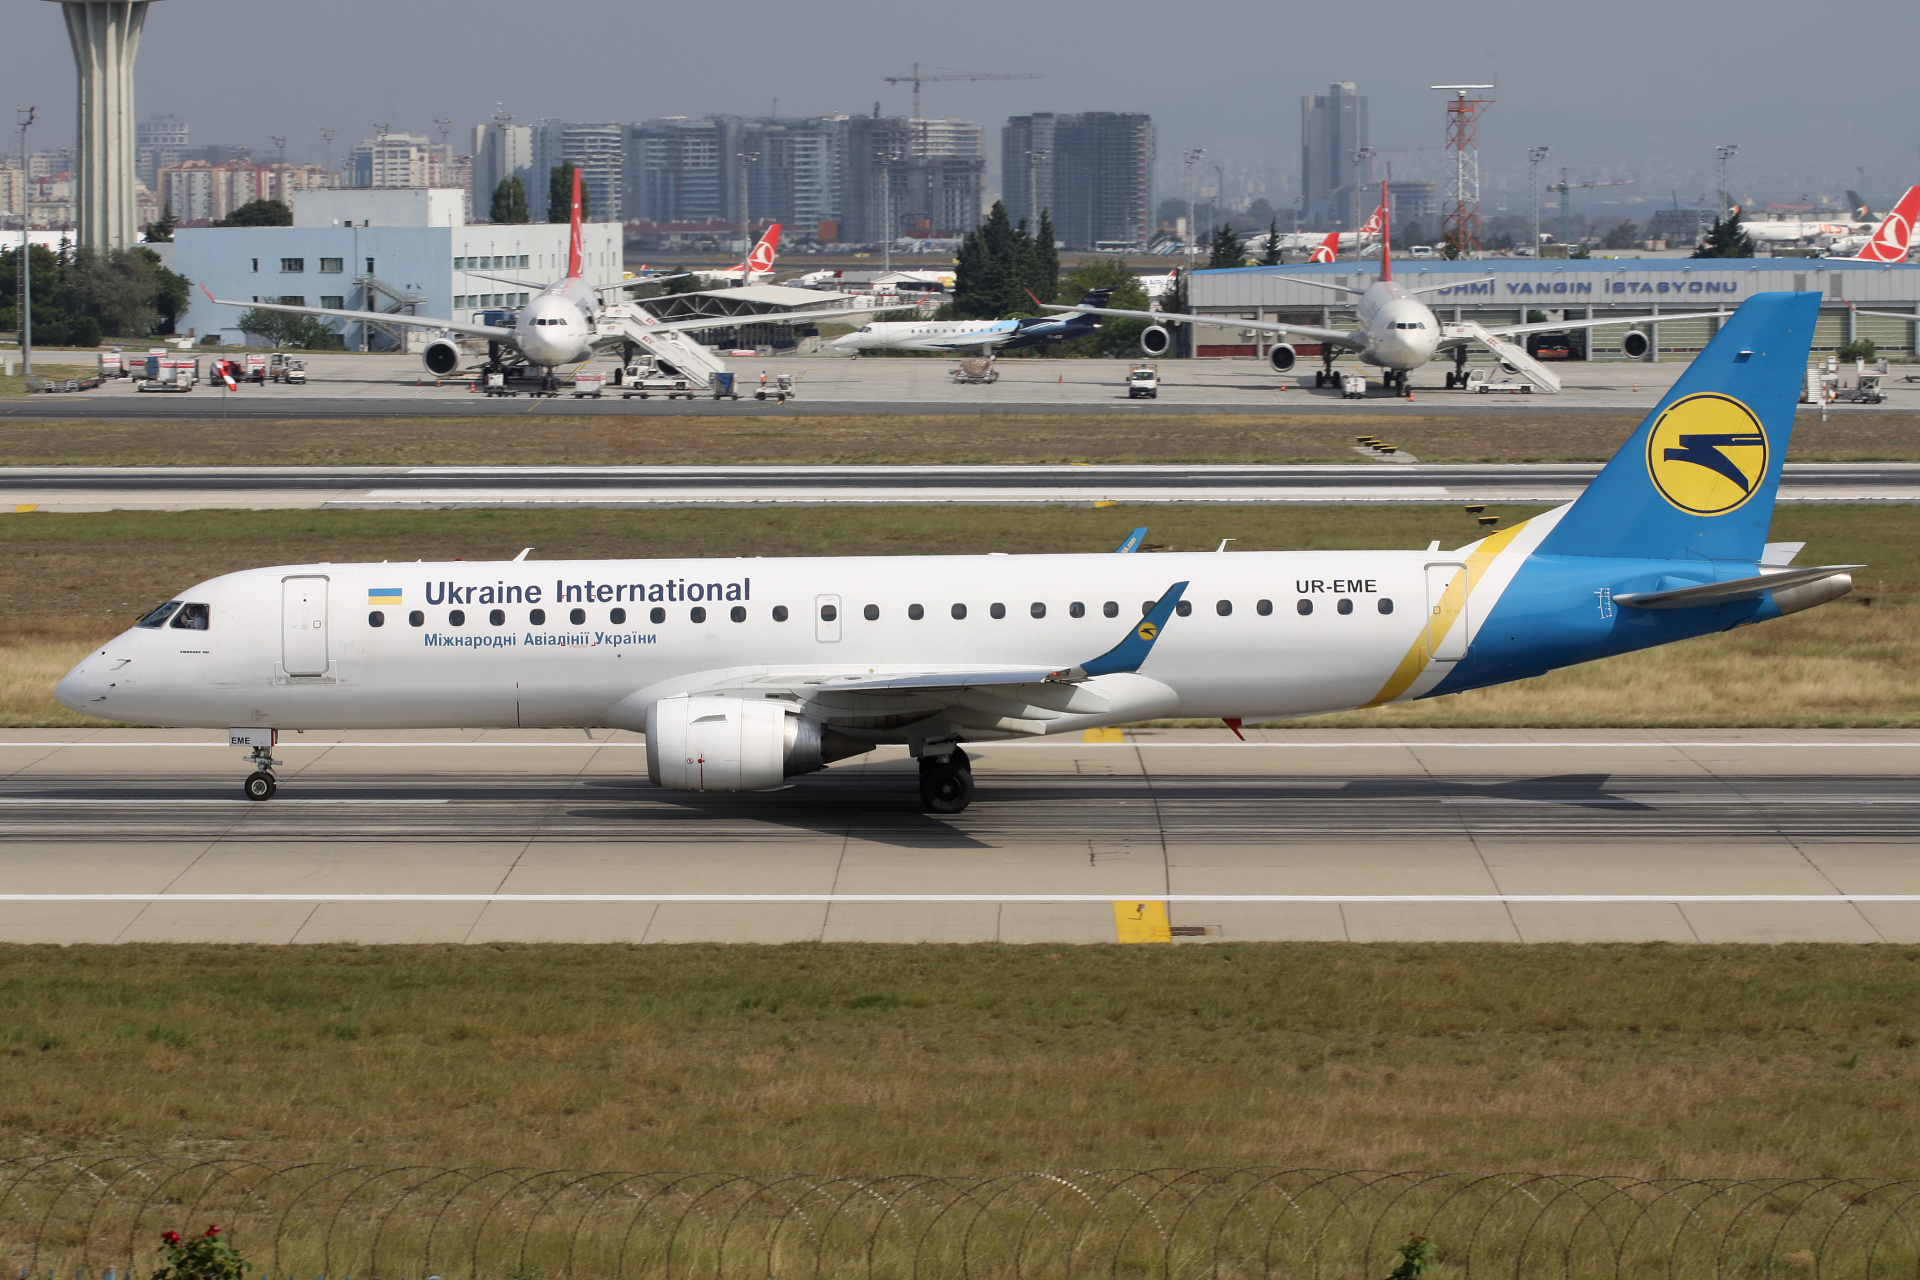 UR-EME, Ukraine International Airlines (Samoloty » Port Lotniczy im. Atatürka w Stambule » Embraer ERJ-190)